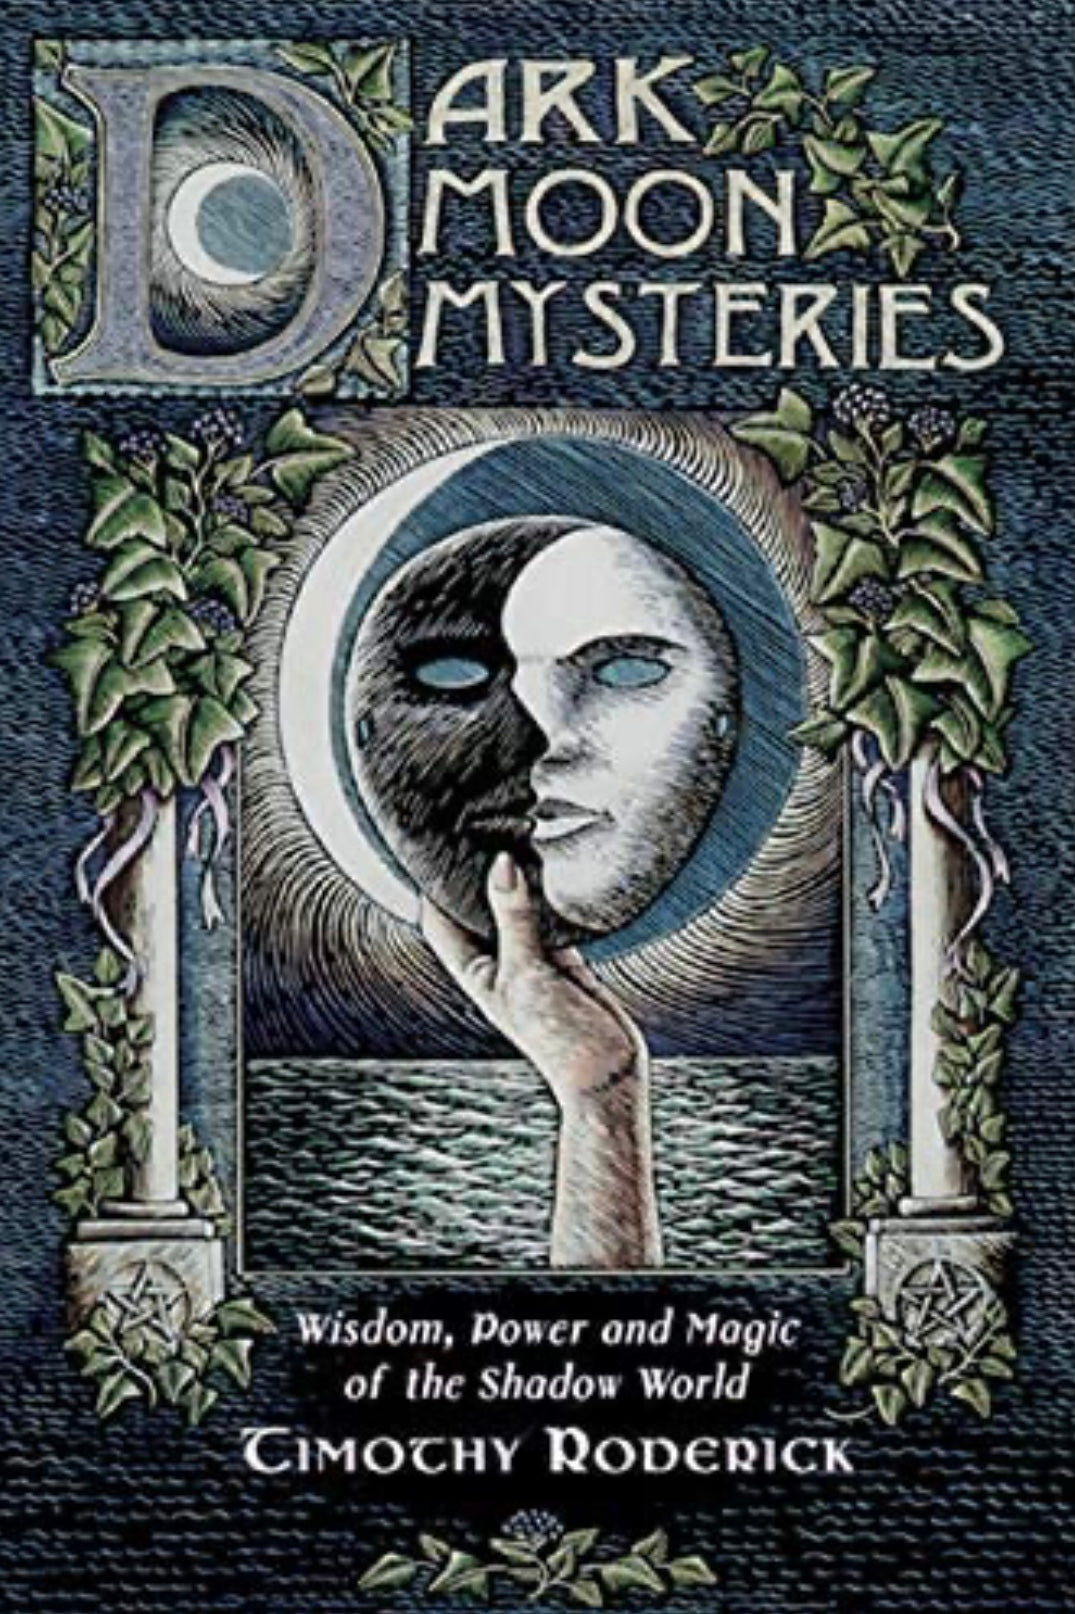 Dark Moon Mysteries: Wisdom, Power and Magic of the Shadow World